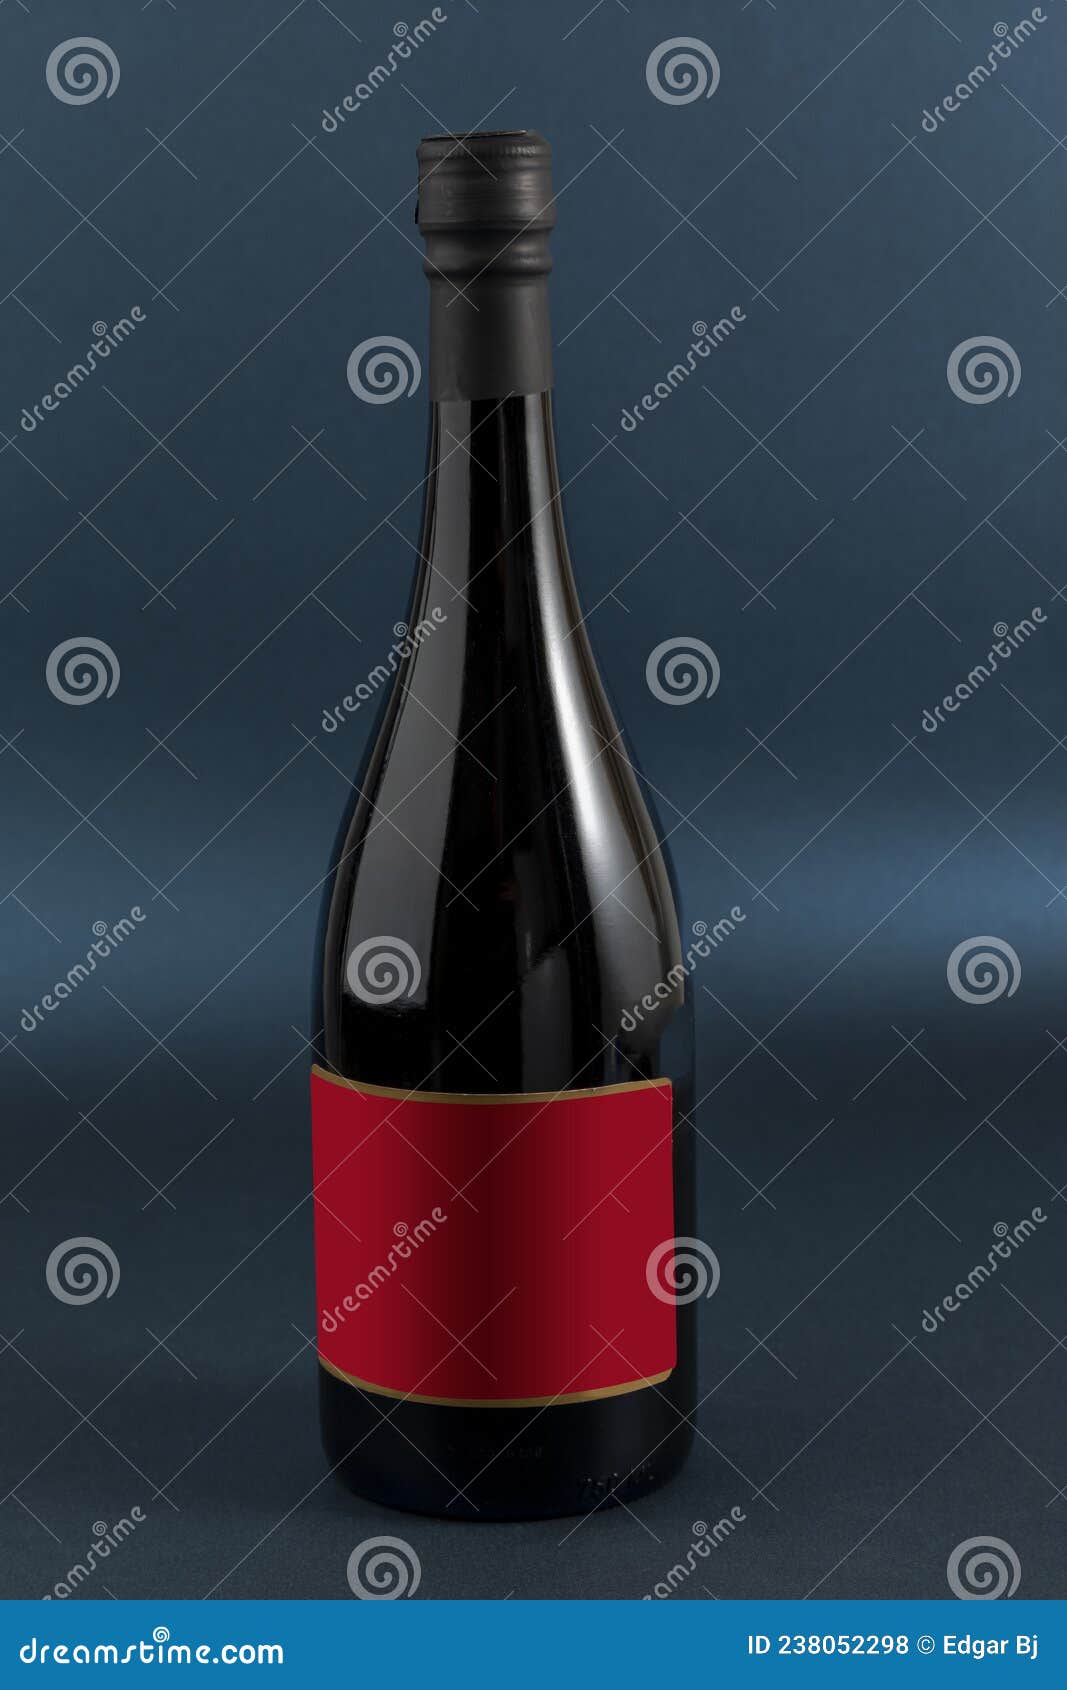 botella de vino con etiqueta roja para texto o marca, y un fondo de color azul